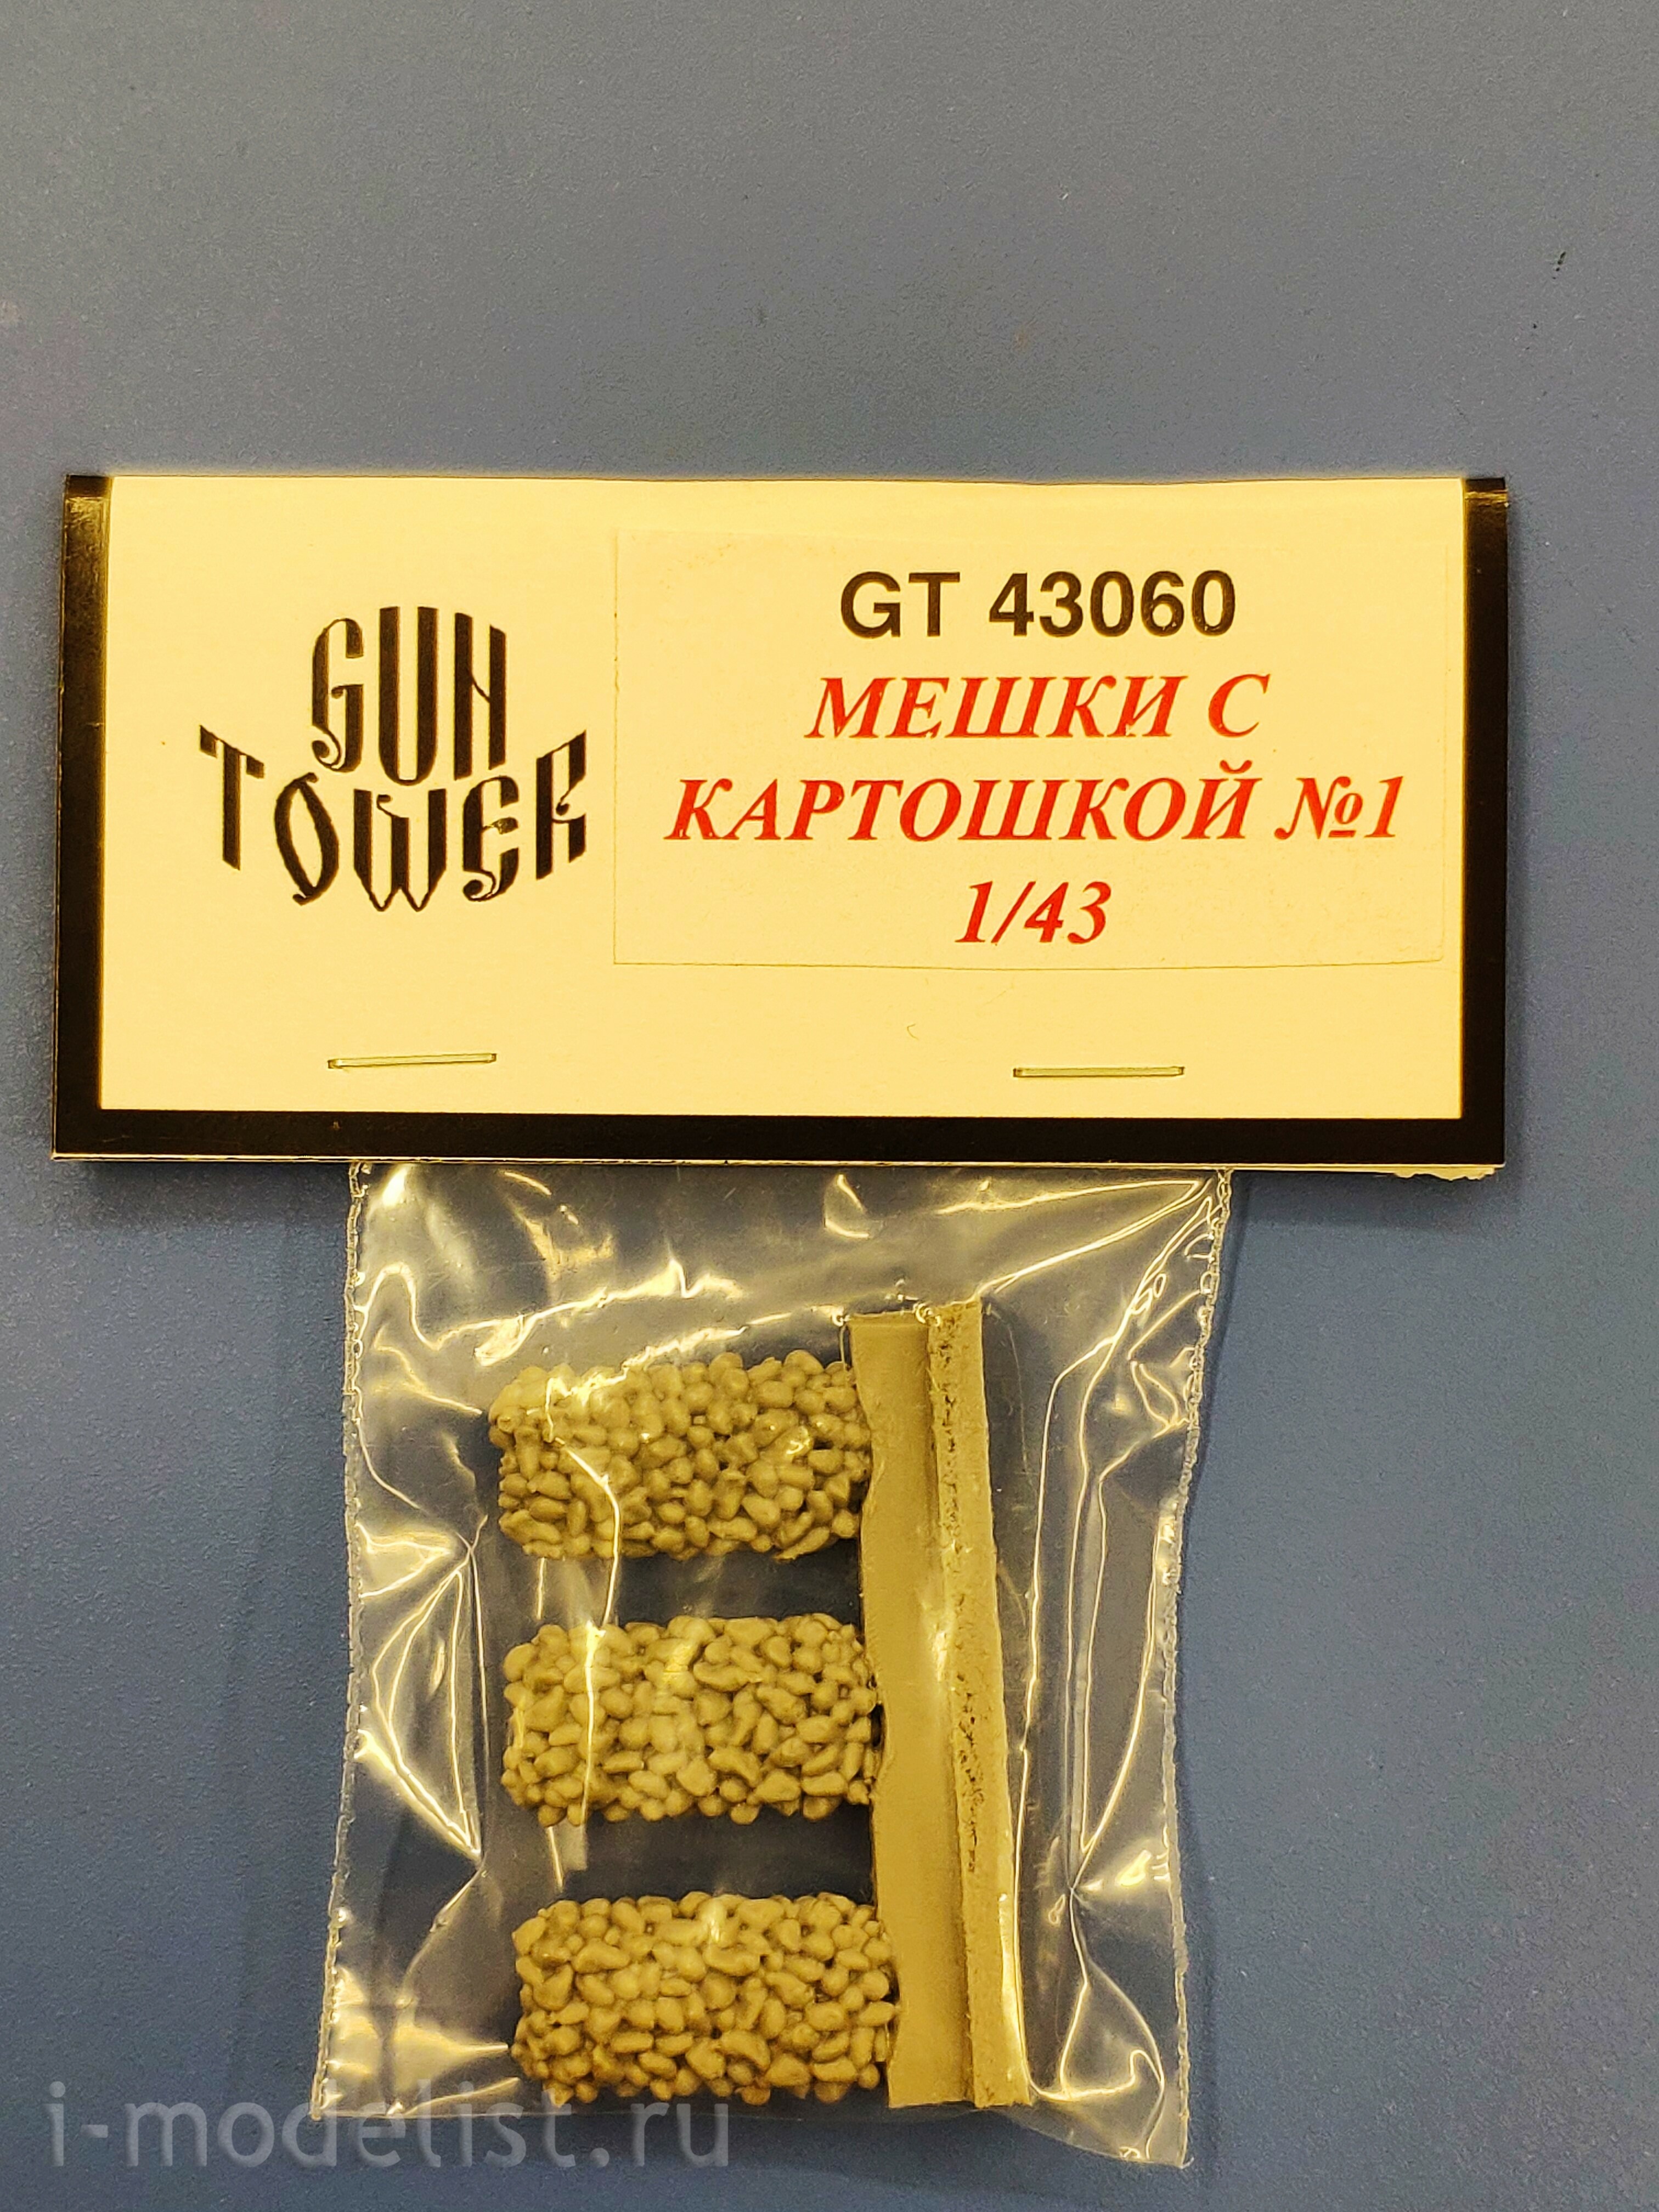 43060 GunTowerModels 1/43 Мешки с картошкой 1